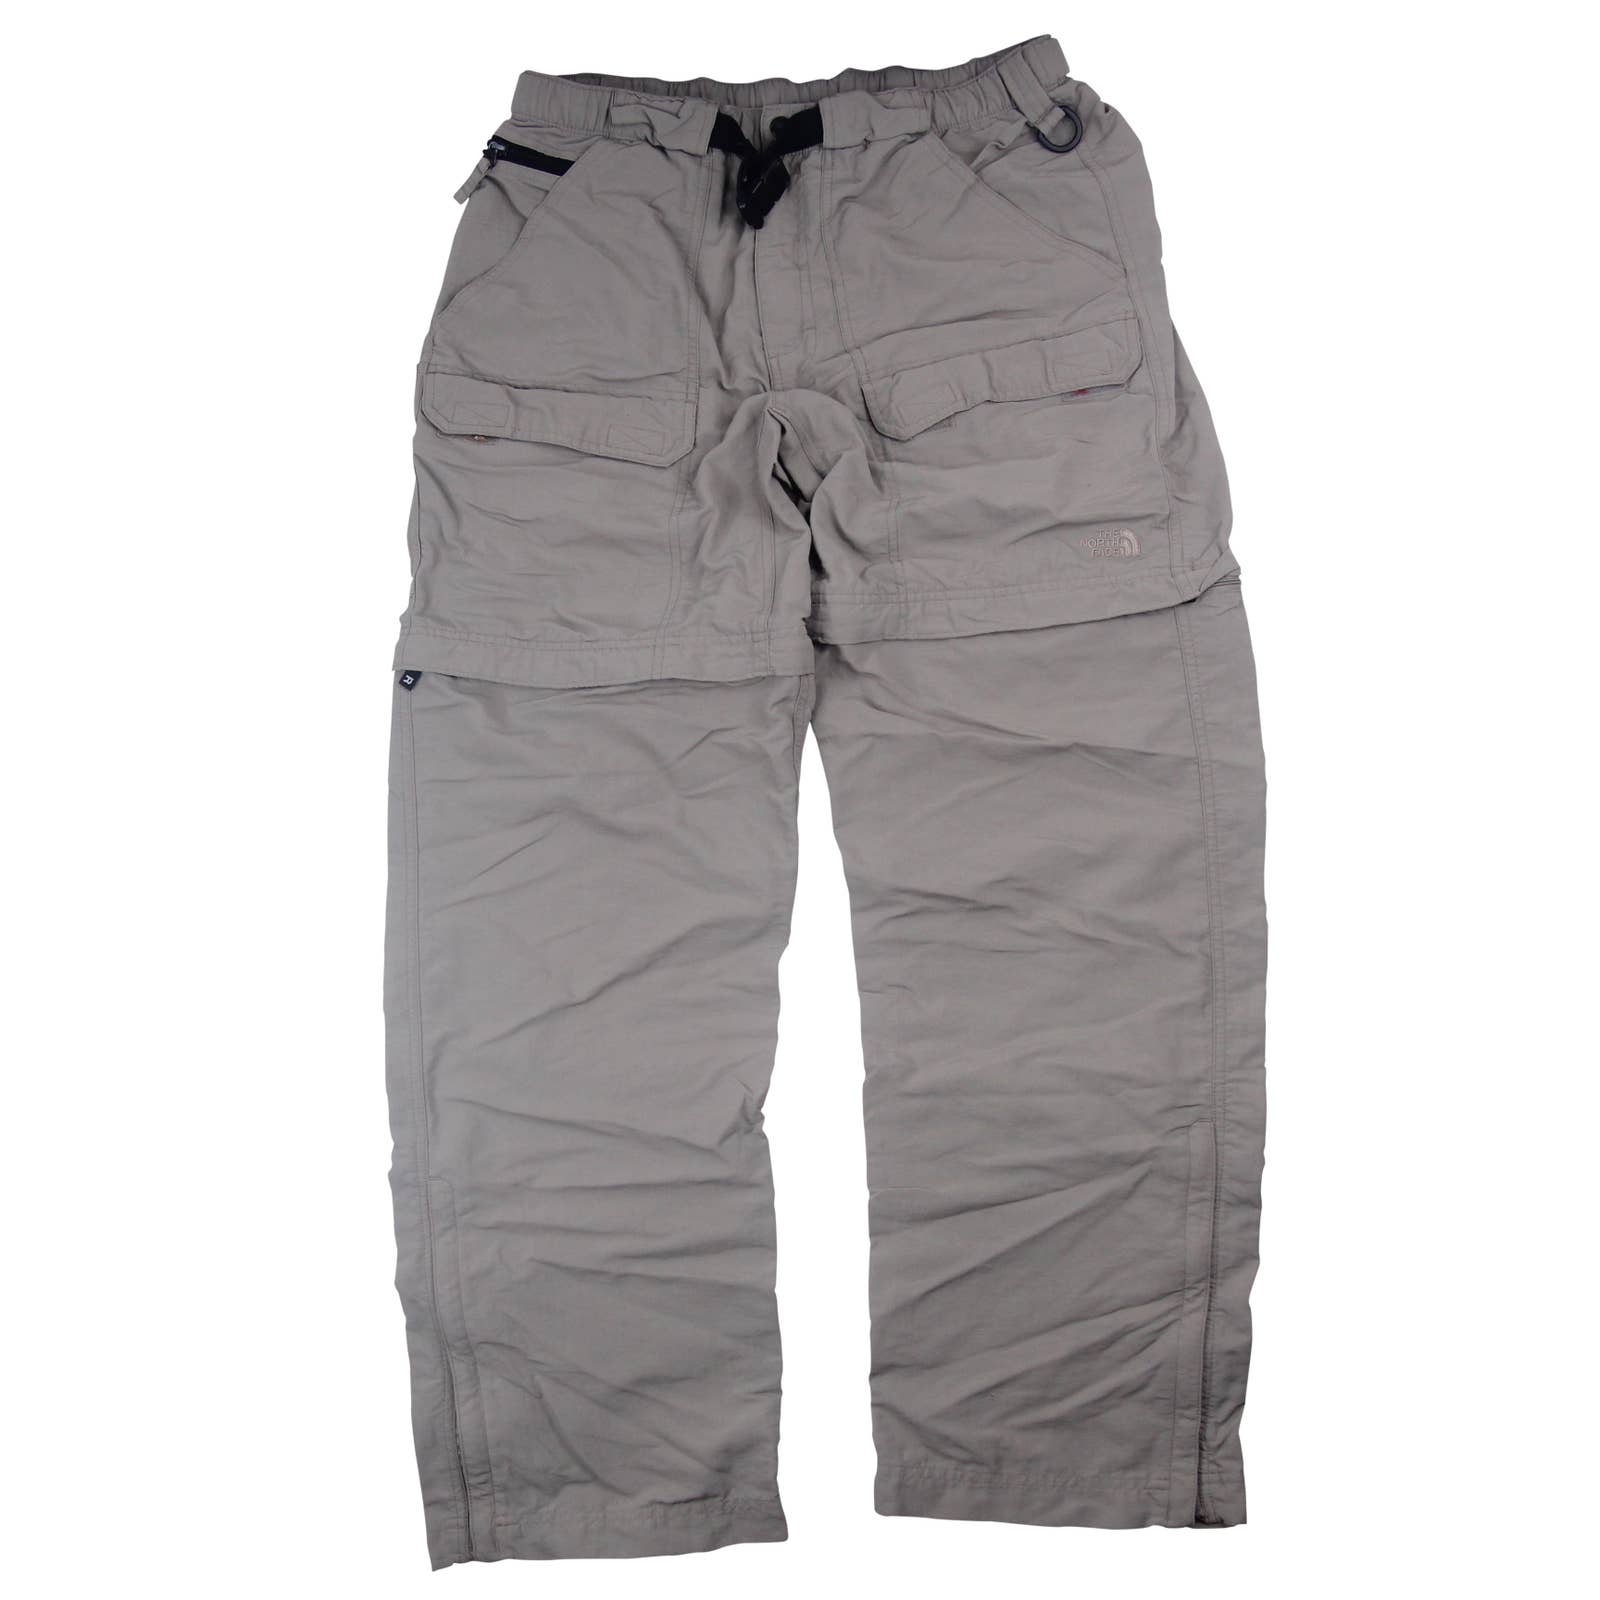 Vintage The North Face Convertible Hiking Pants/Shorts - M – Jak